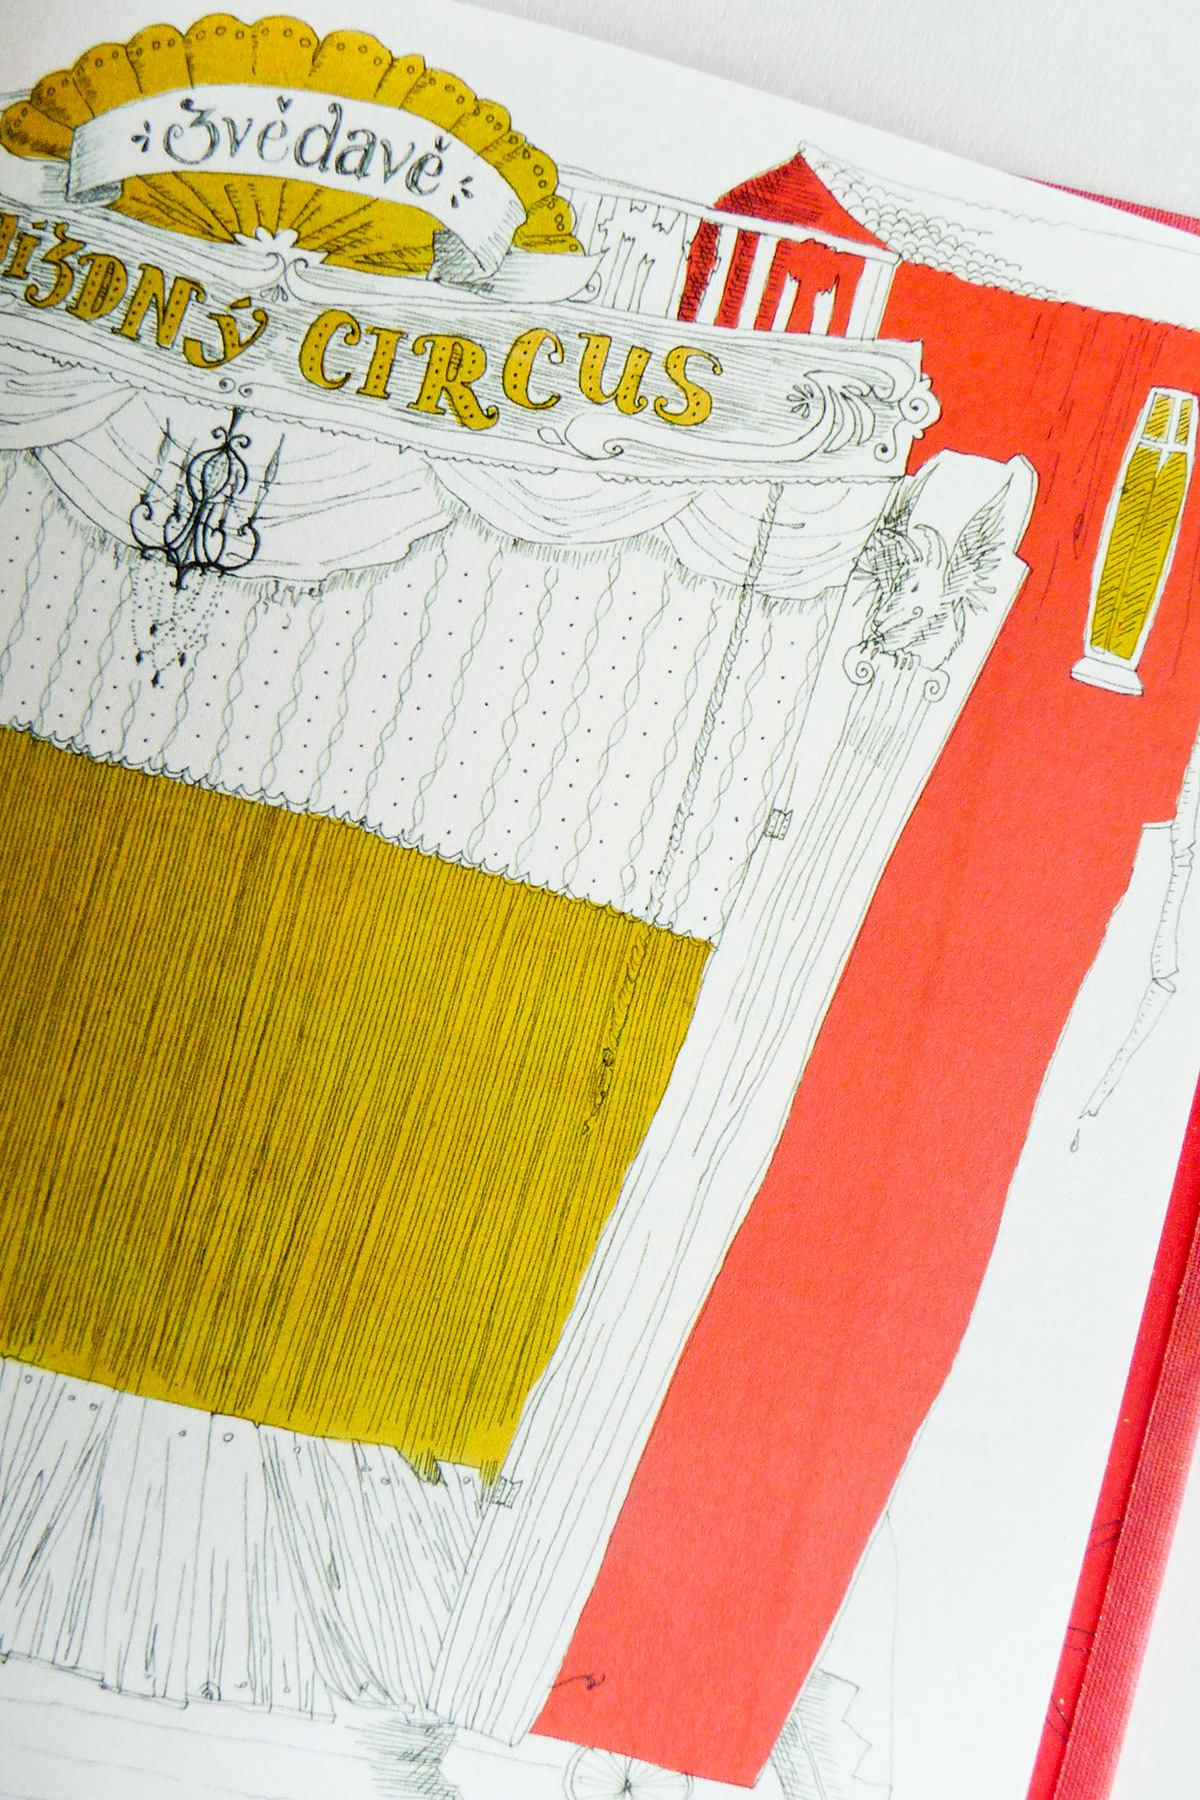 Franz Kafka Kurier des Czaren  book  Illustration Circus